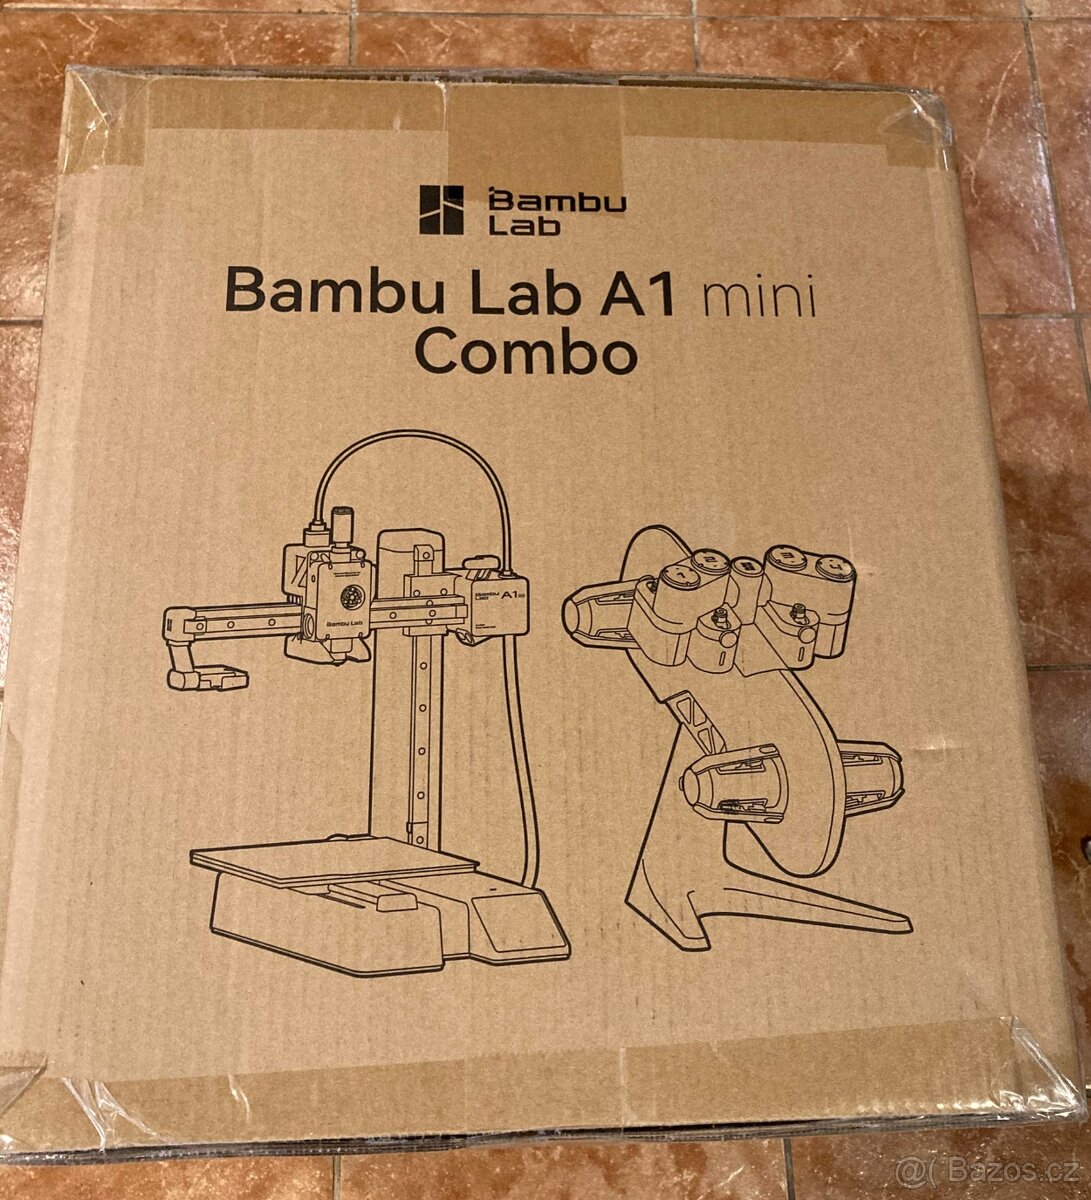 Bambulab A1 mini combo